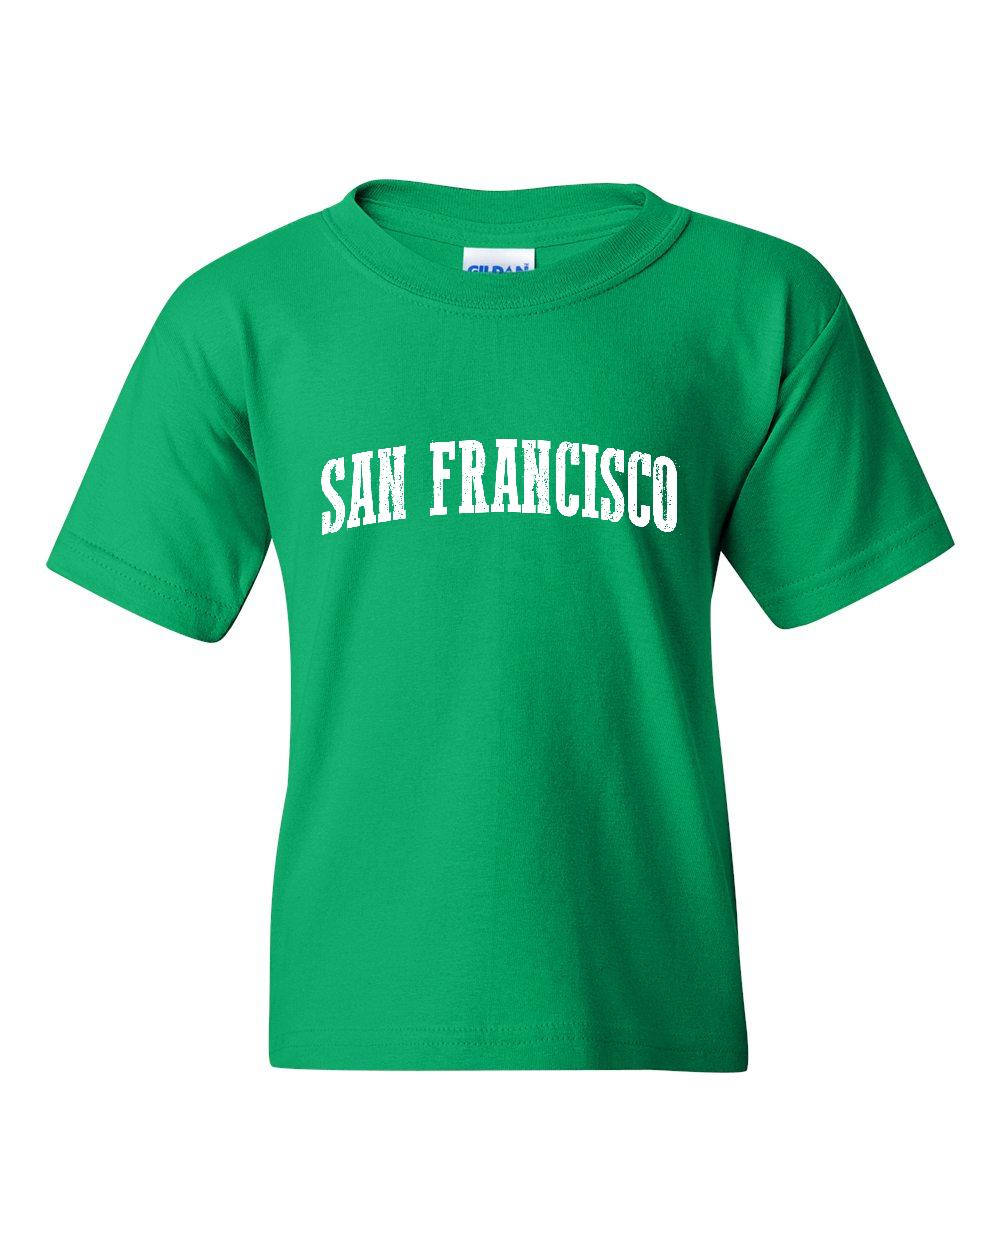 Artix - Big Boys T-Shirts and Tank Tops - San Francisco - image 1 of 5